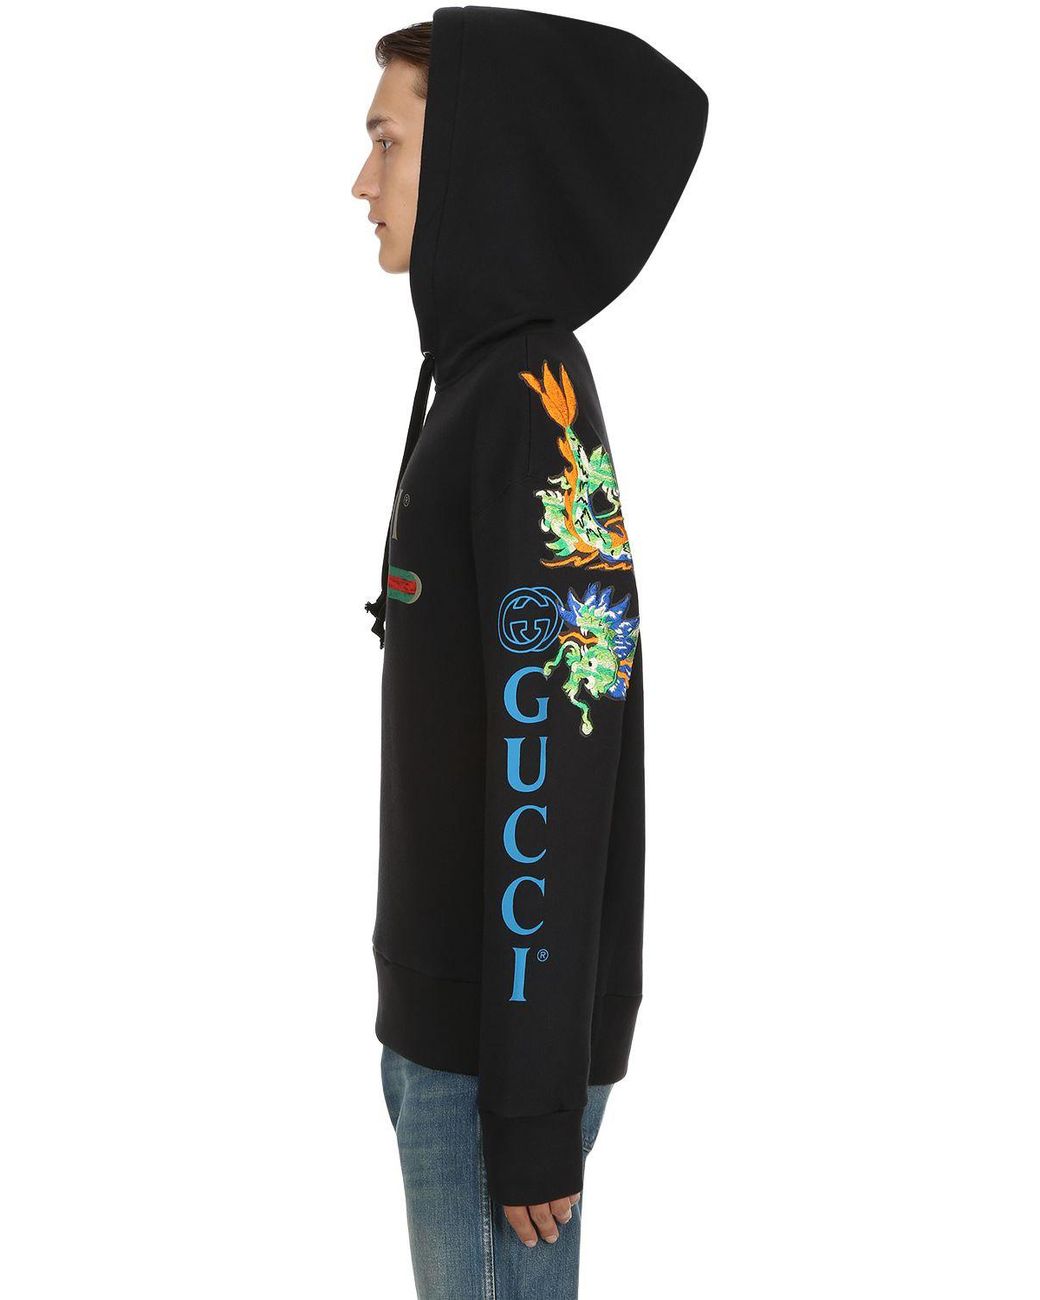 Gucci Men's Black Vintage Logo Cotton Sweatshirt Hooded